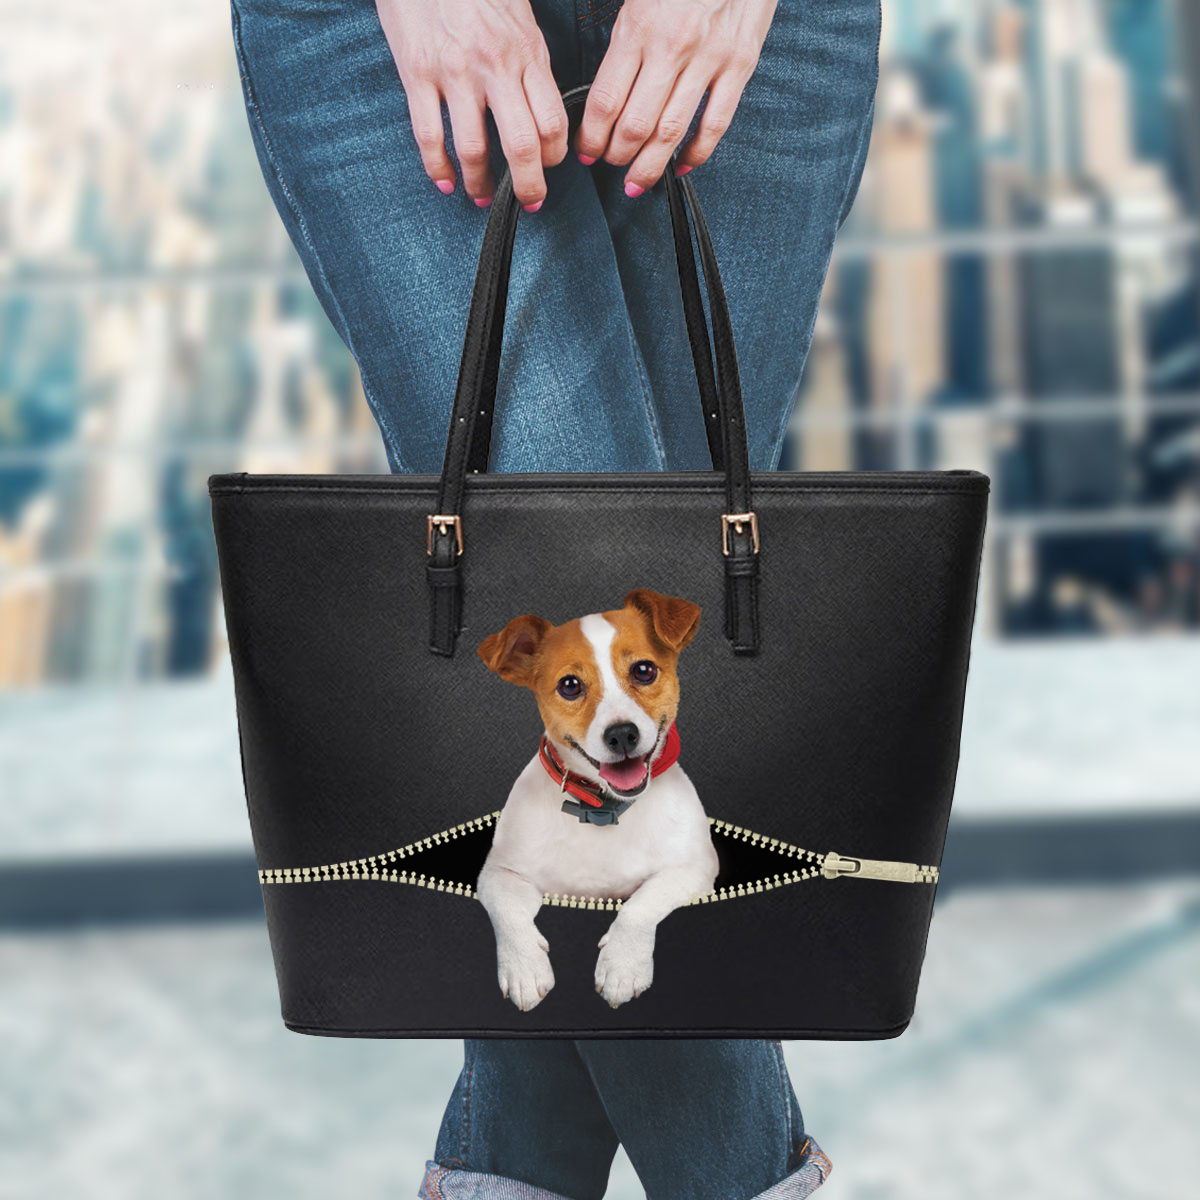 Jack Russell Terrier Tote Bag V2